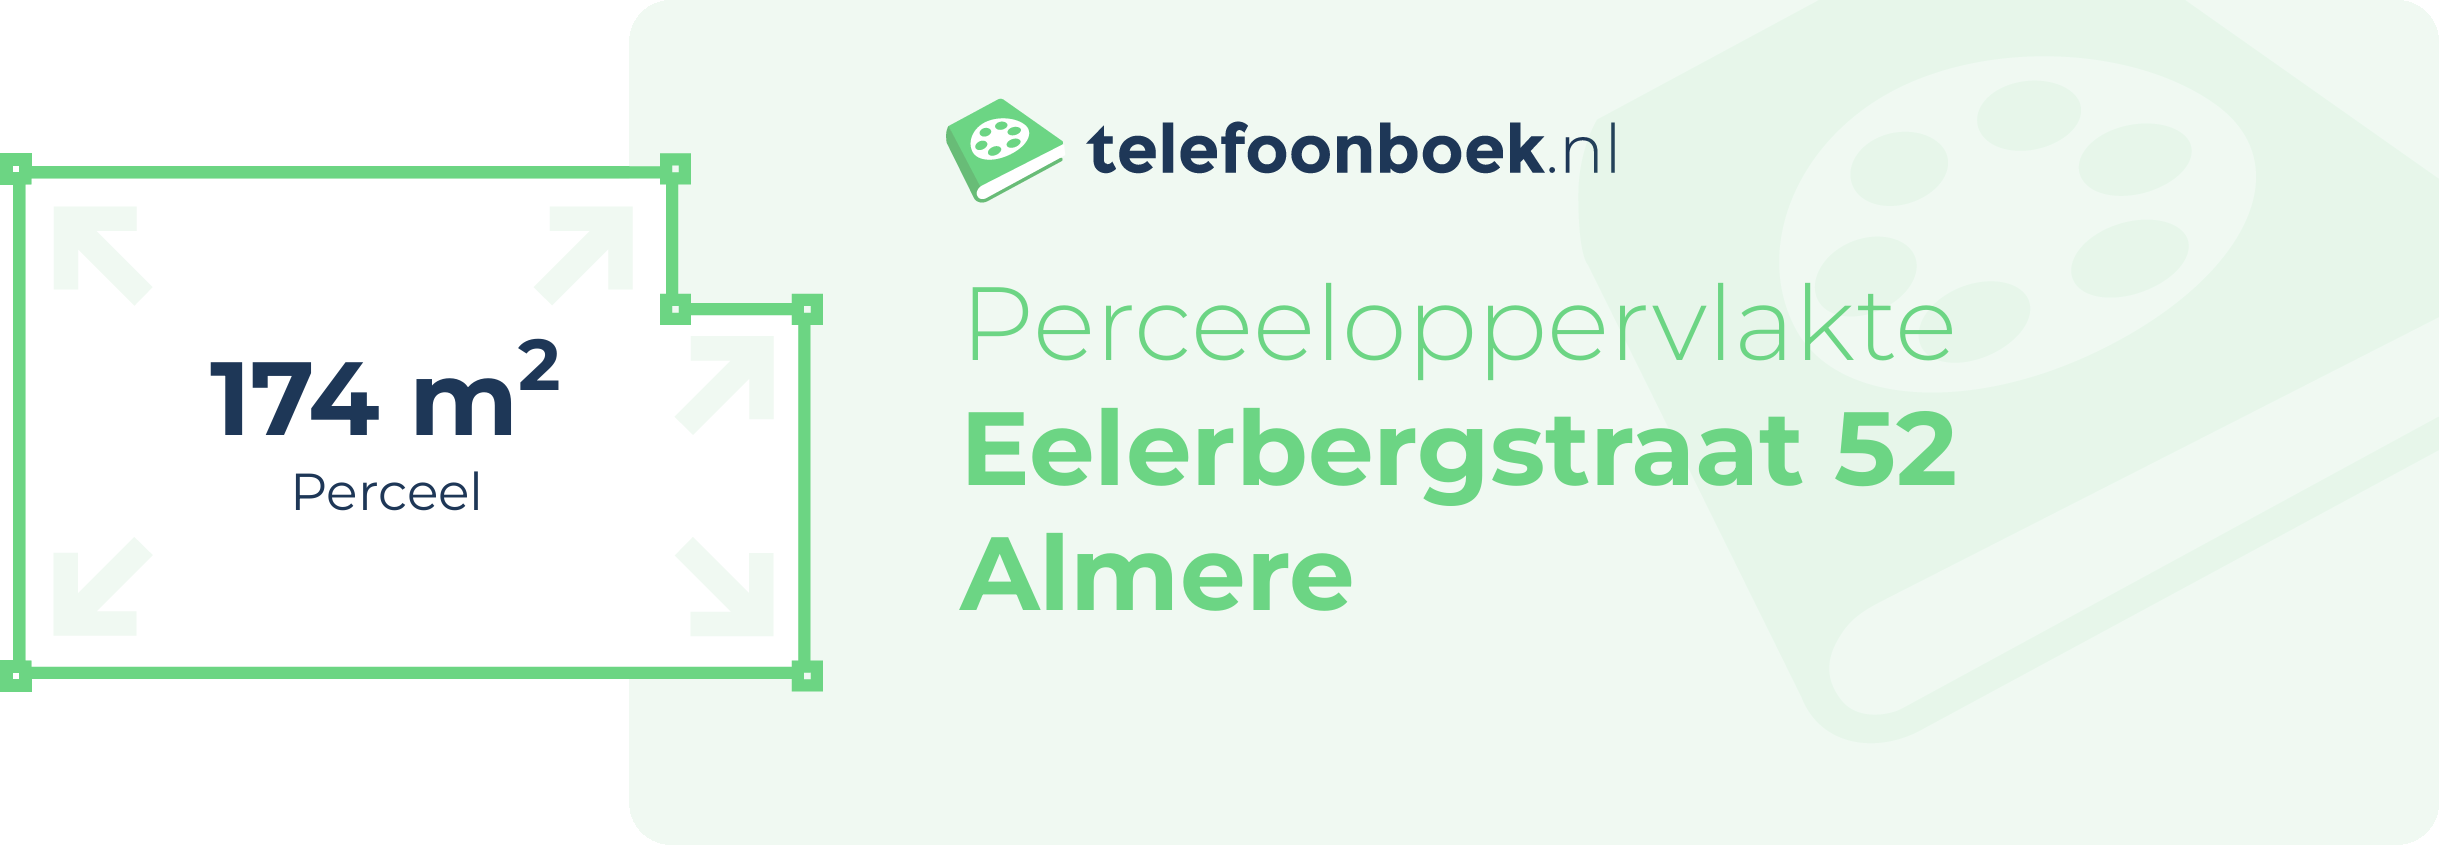 Perceeloppervlakte Eelerbergstraat 52 Almere